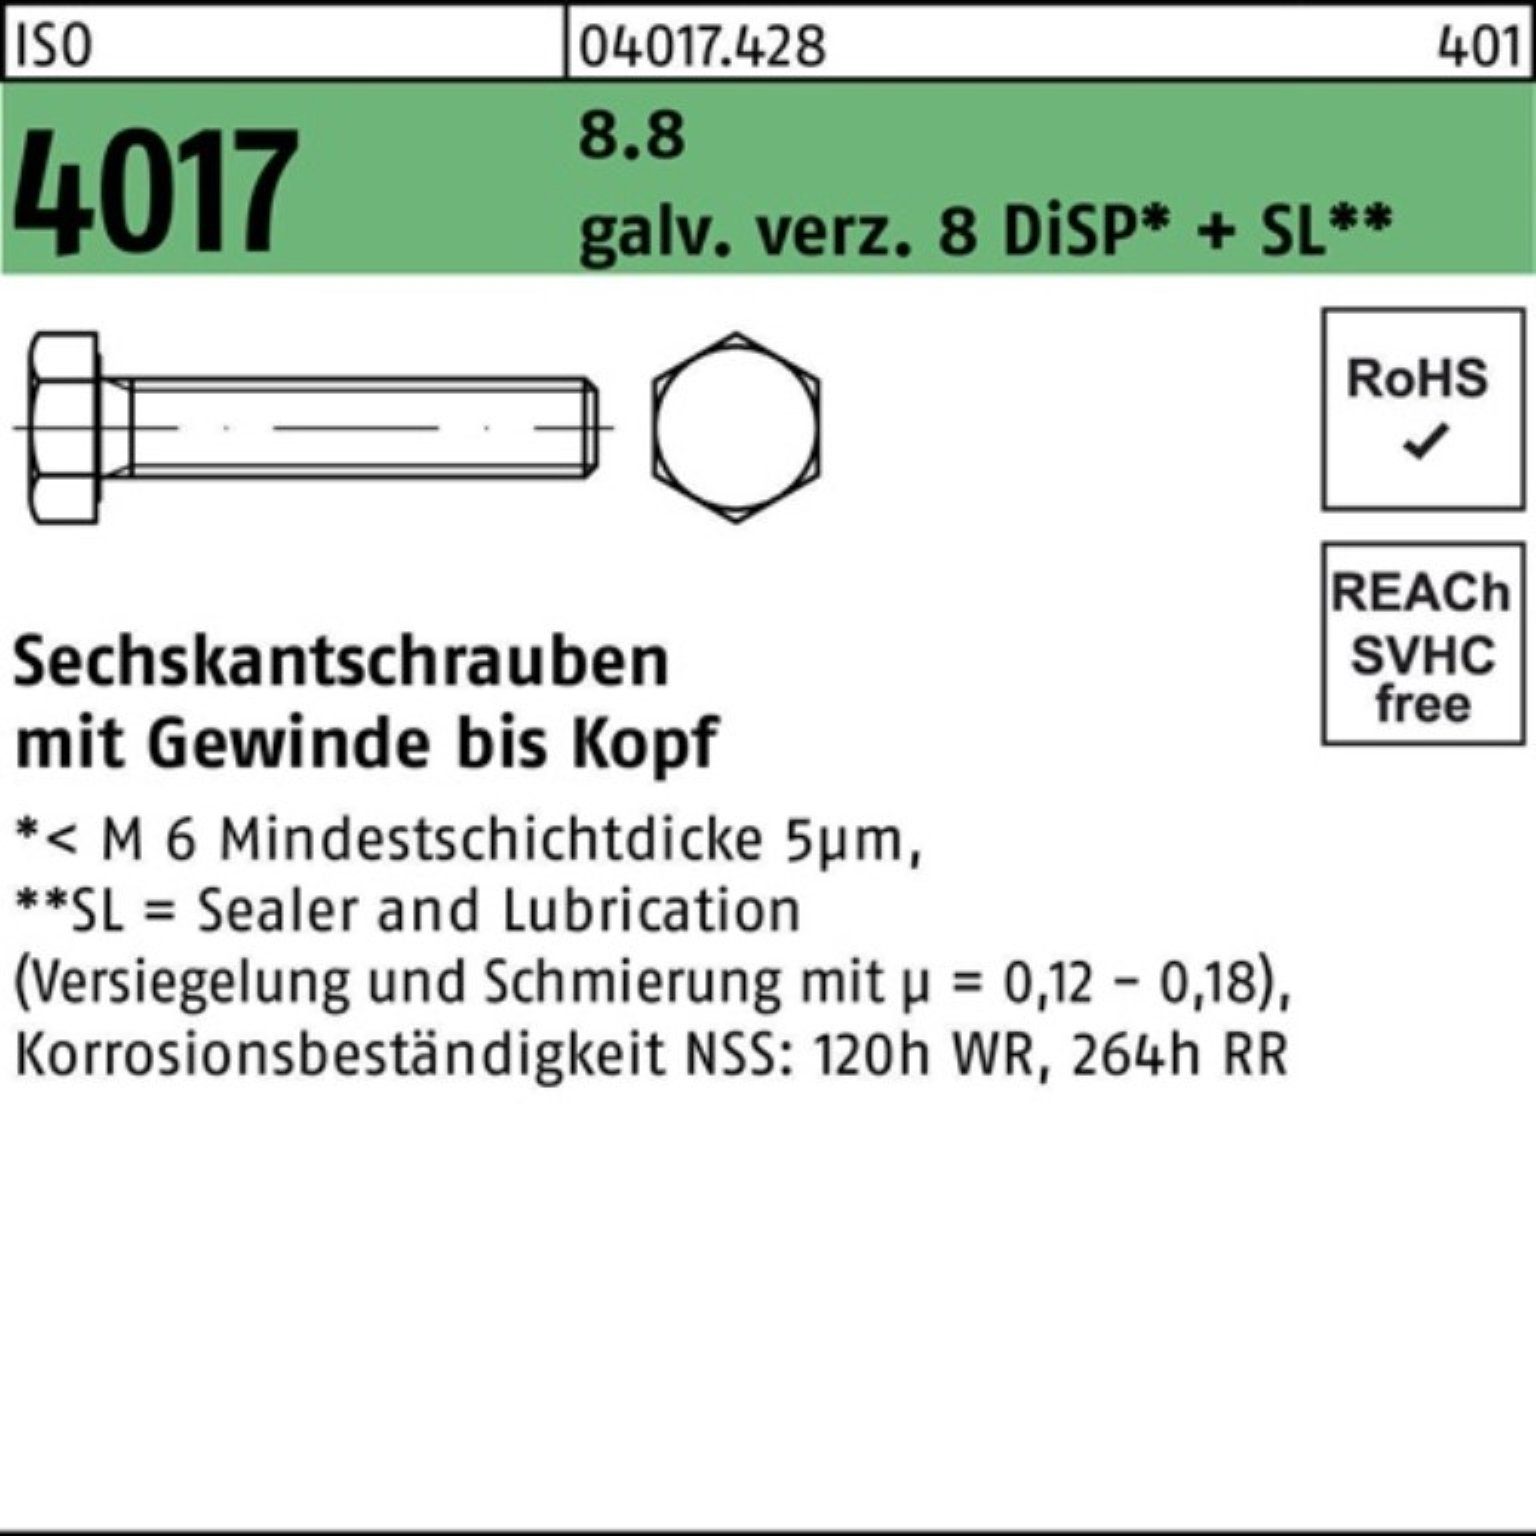 Bufab Sechskantschraube 100er Pack Sechskantschraube DiS M12x ISO 8 220 8.8 VG 4017 galv.verz